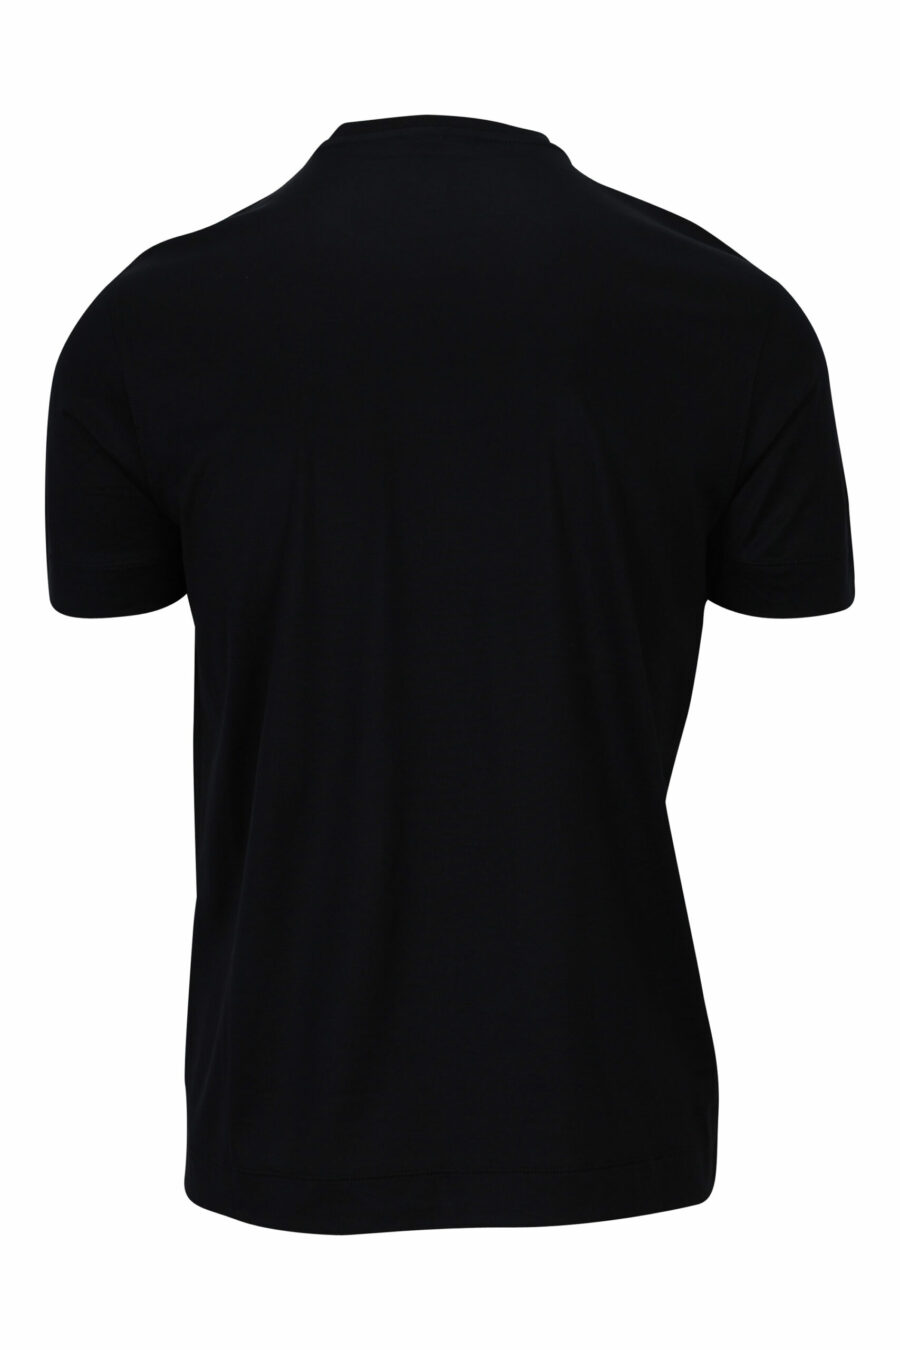 Black T-shirt with white eagle maxilogo outlined - 8057767554040 1 scaled